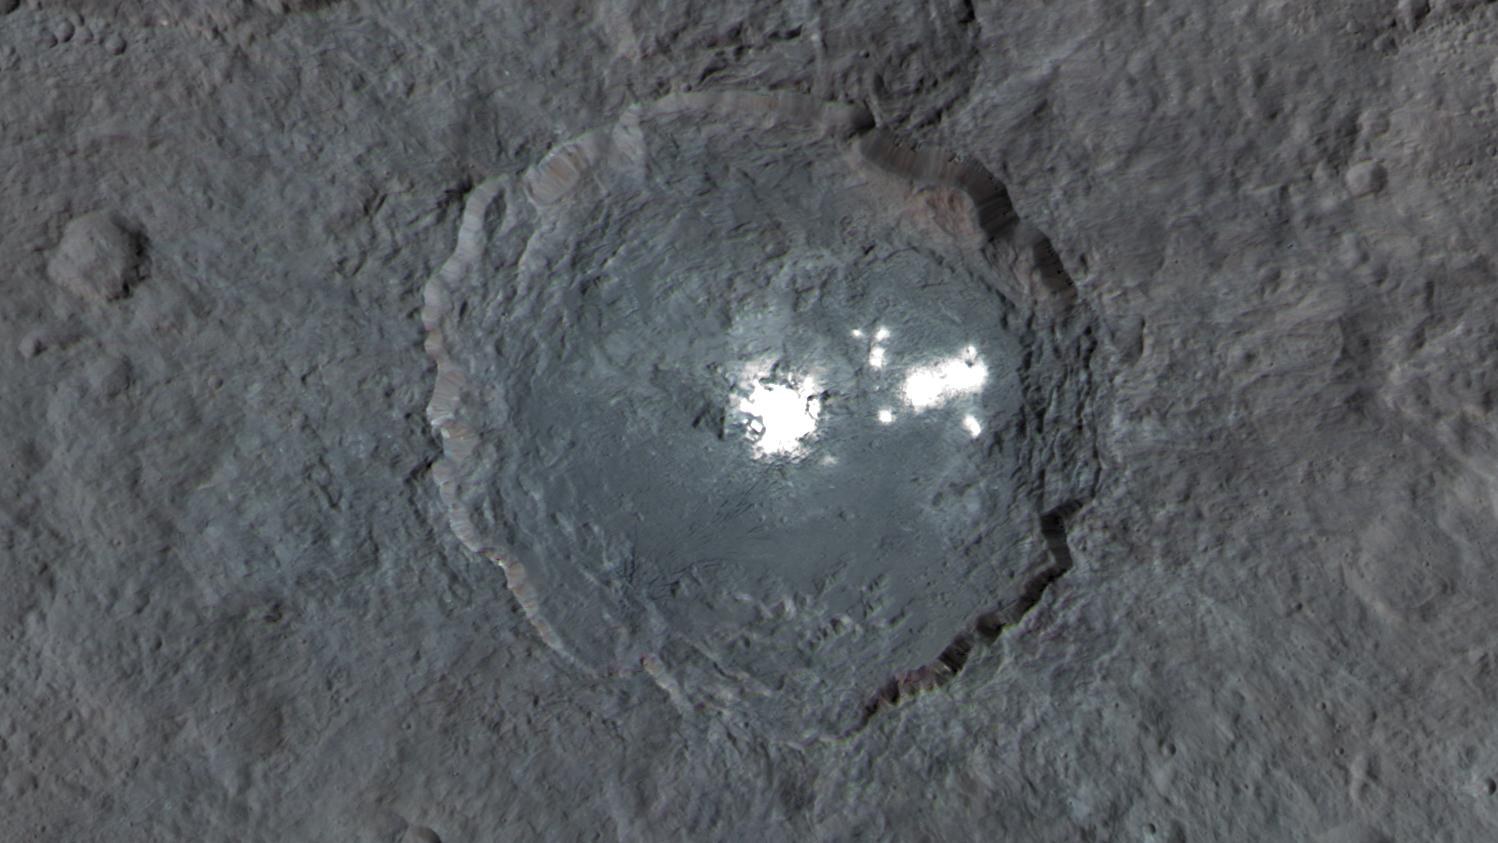 Occator crater